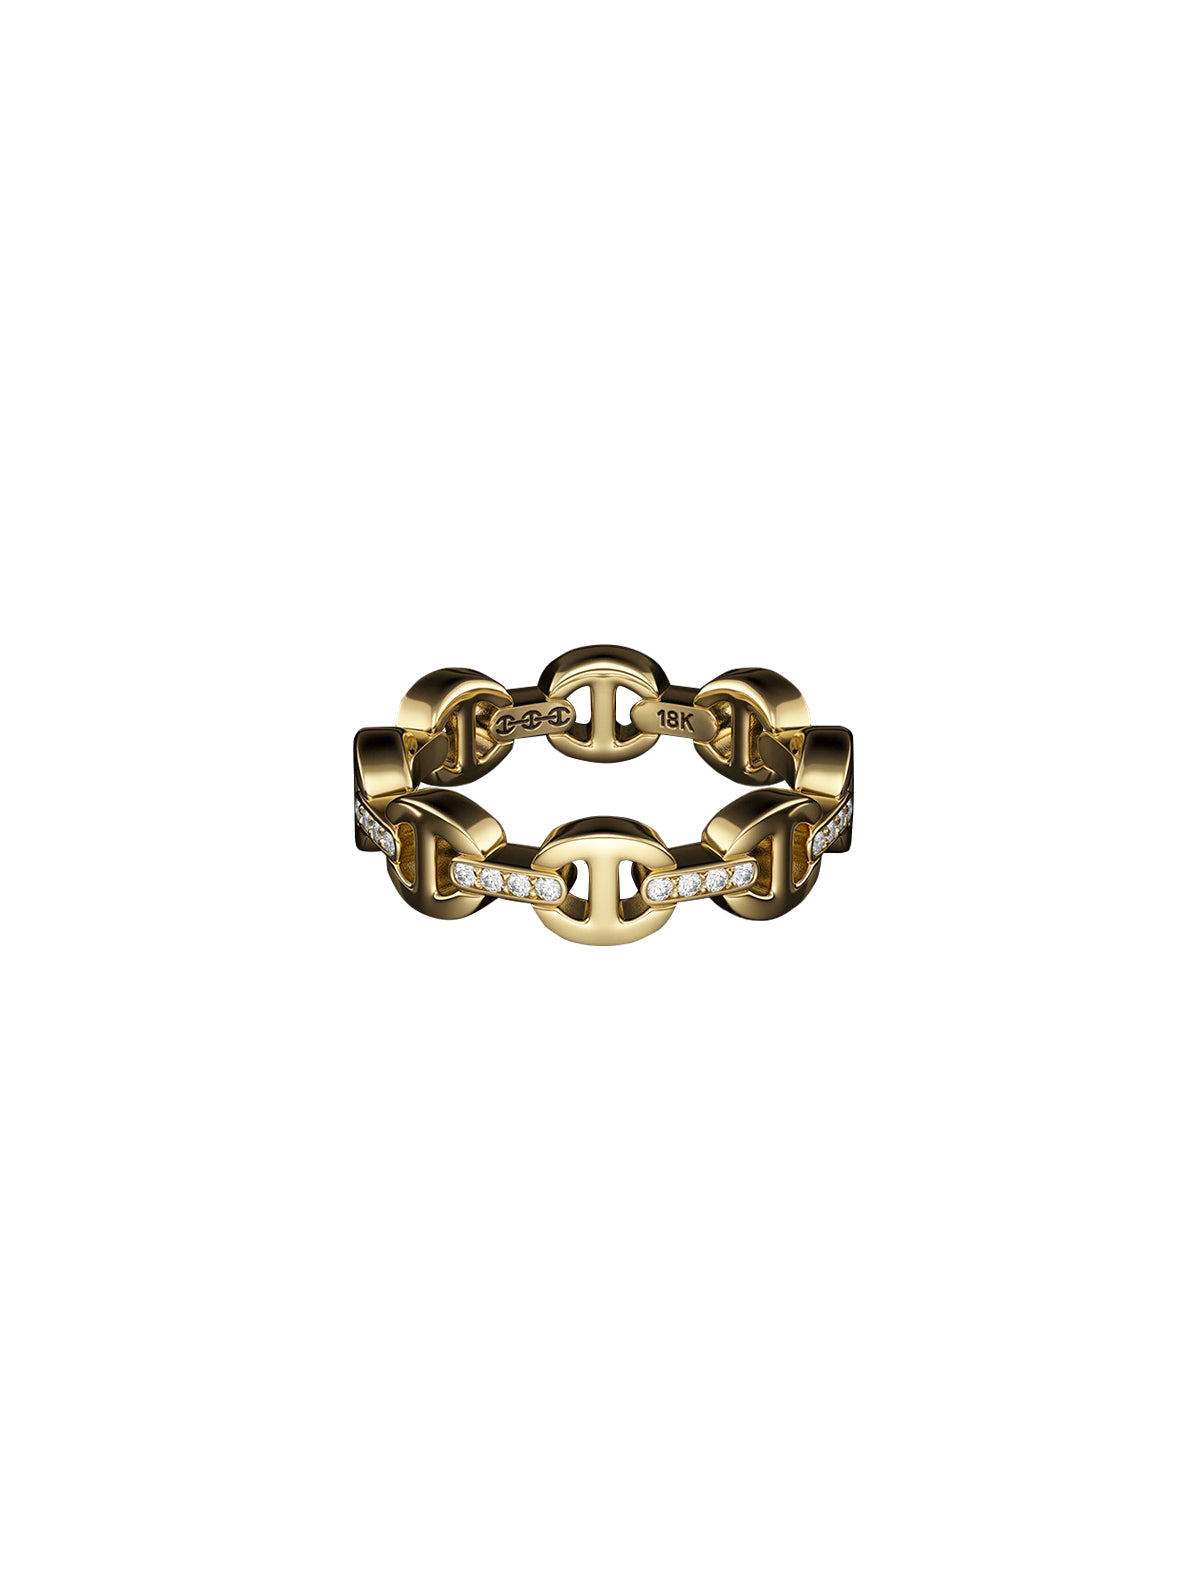 HOORSENBUHS Dame Tri-Link with Diamond Bridges Ring 18k Yellow Gold